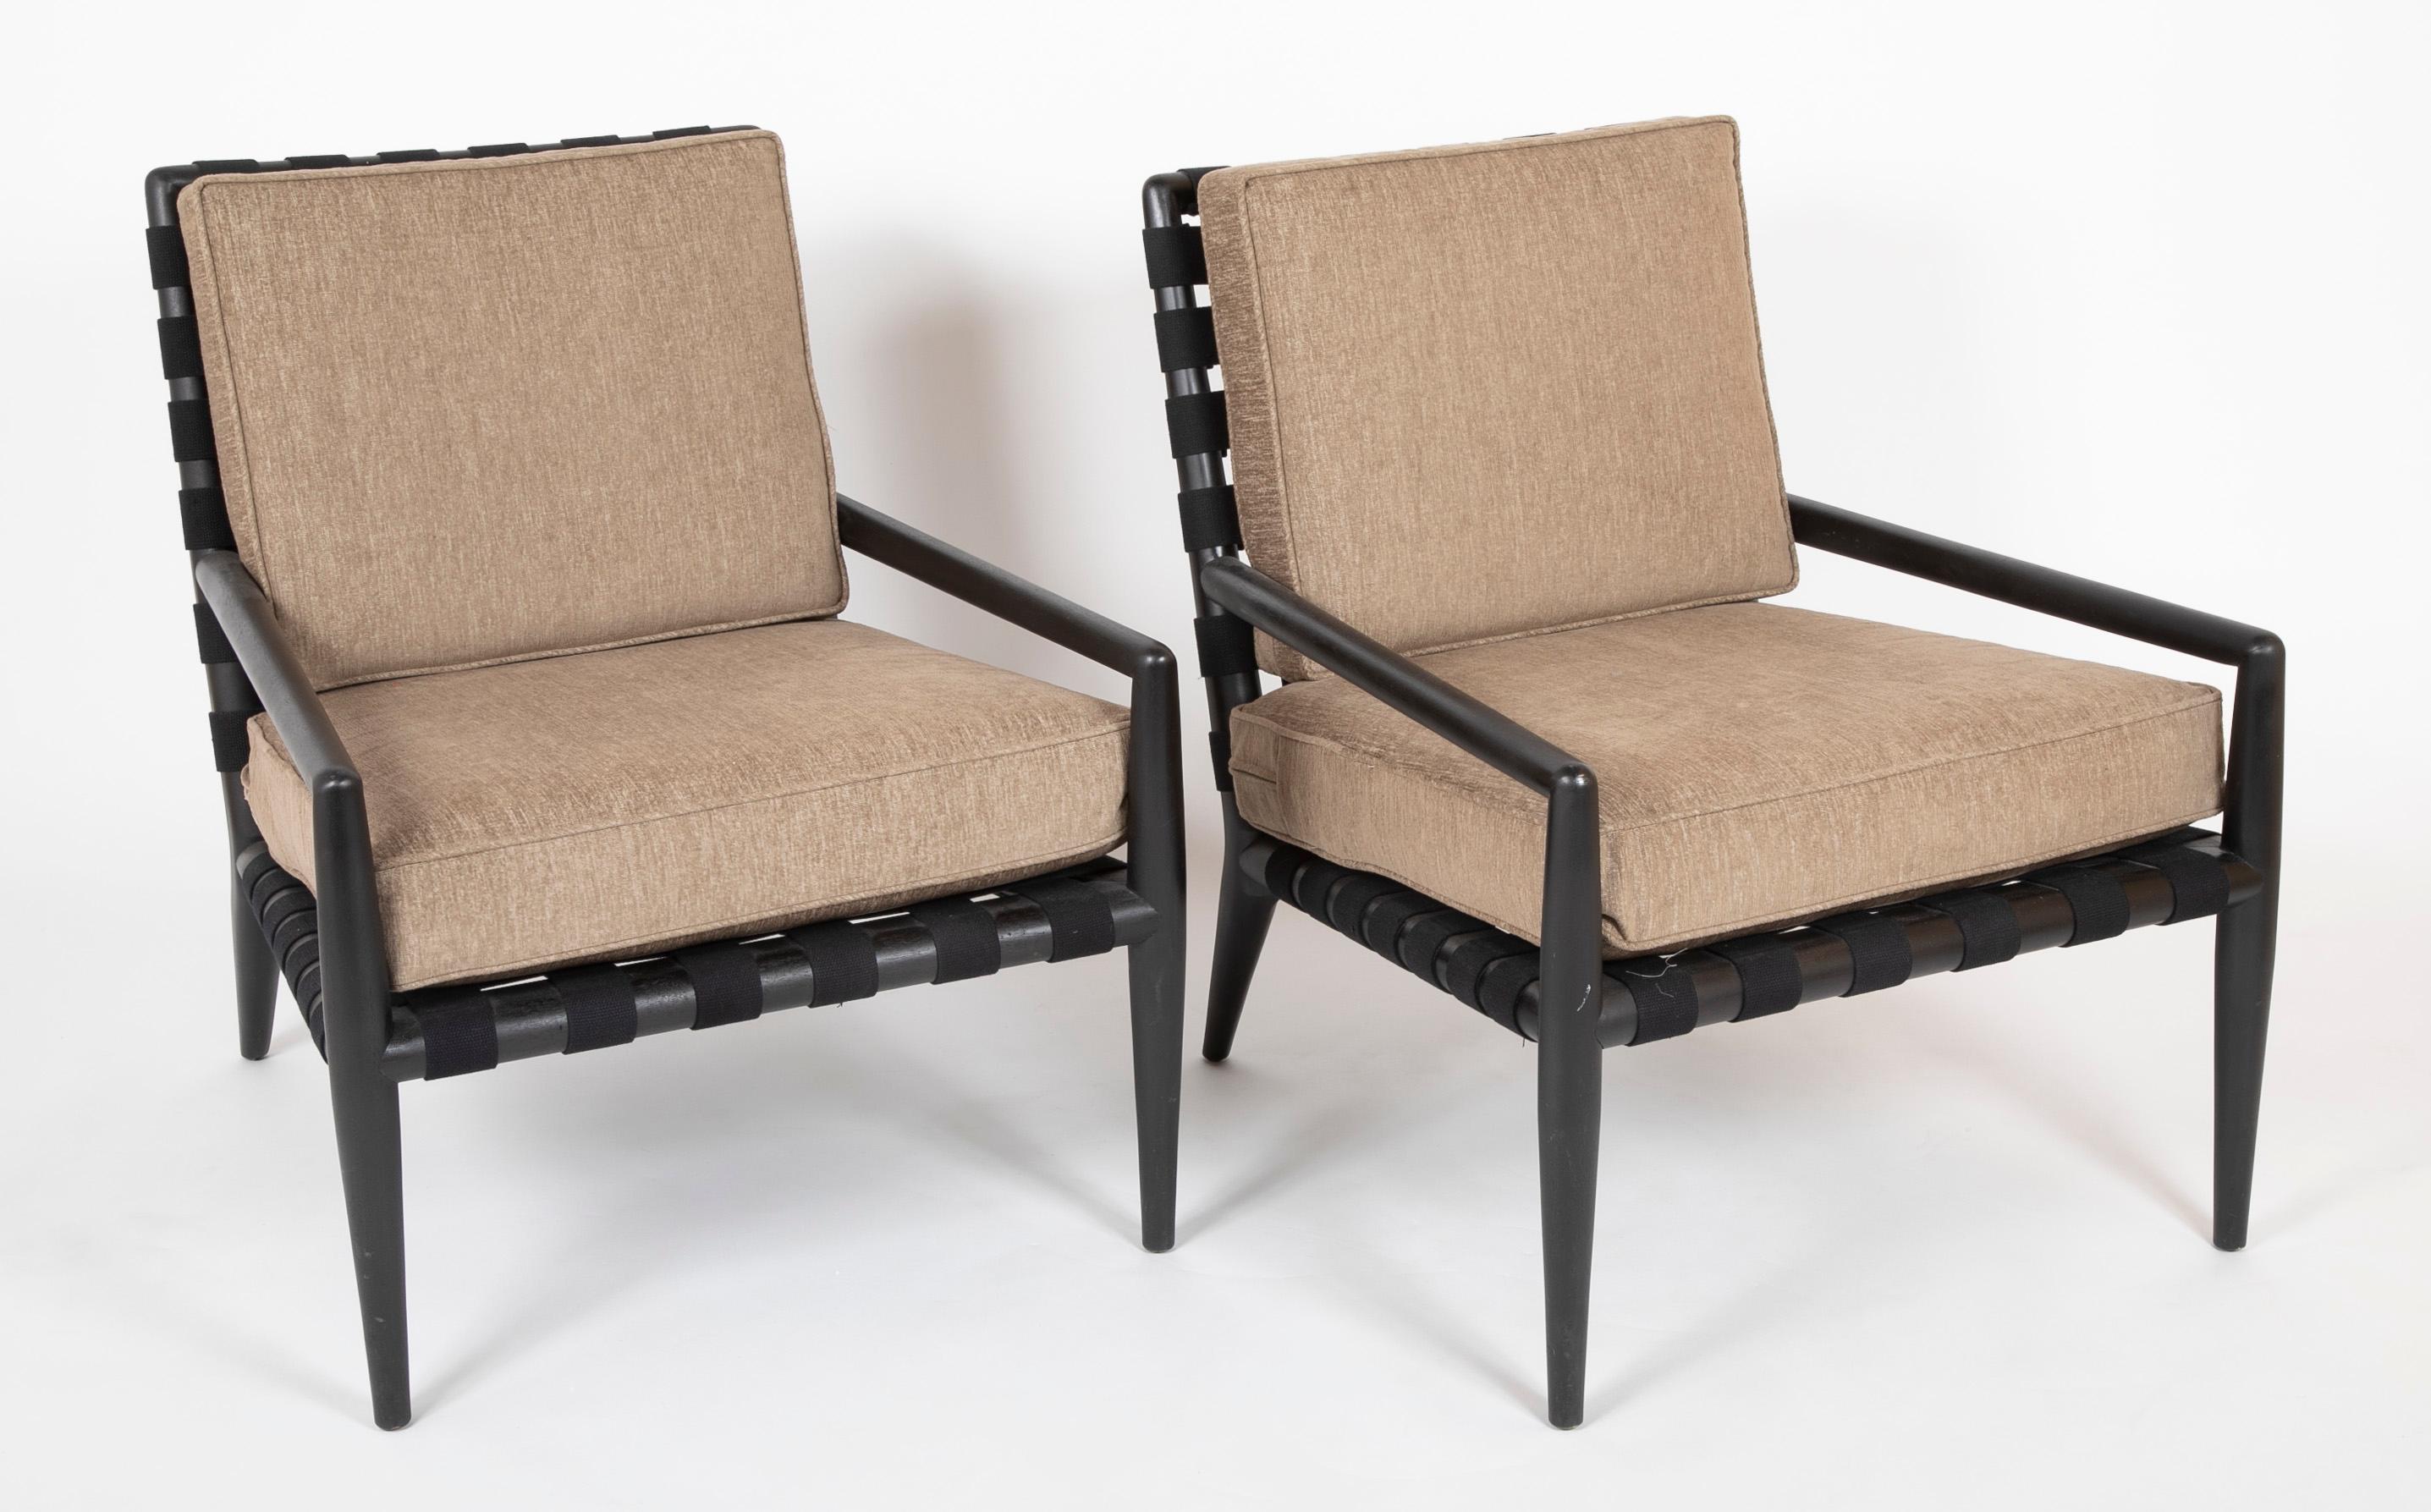 Pair of T. H. Robsjohn-Gibbings for Widdicomb lounge chairs of ebonized walnut- Model 1720. Circa 1955.